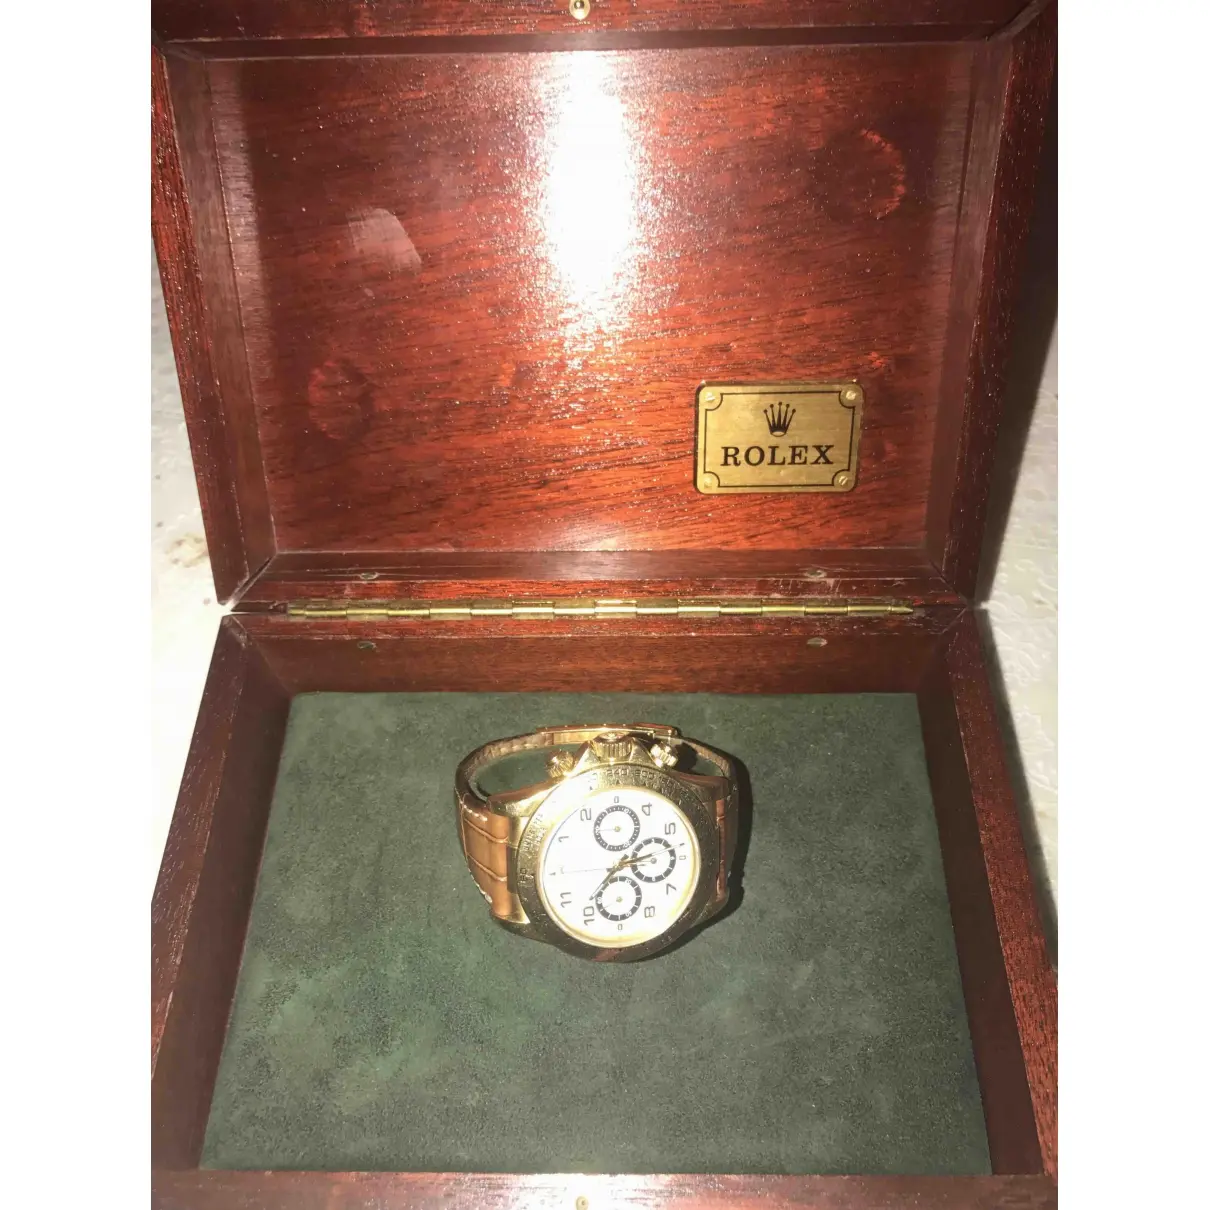 Rolex Daytona yellow gold watch for sale - Vintage